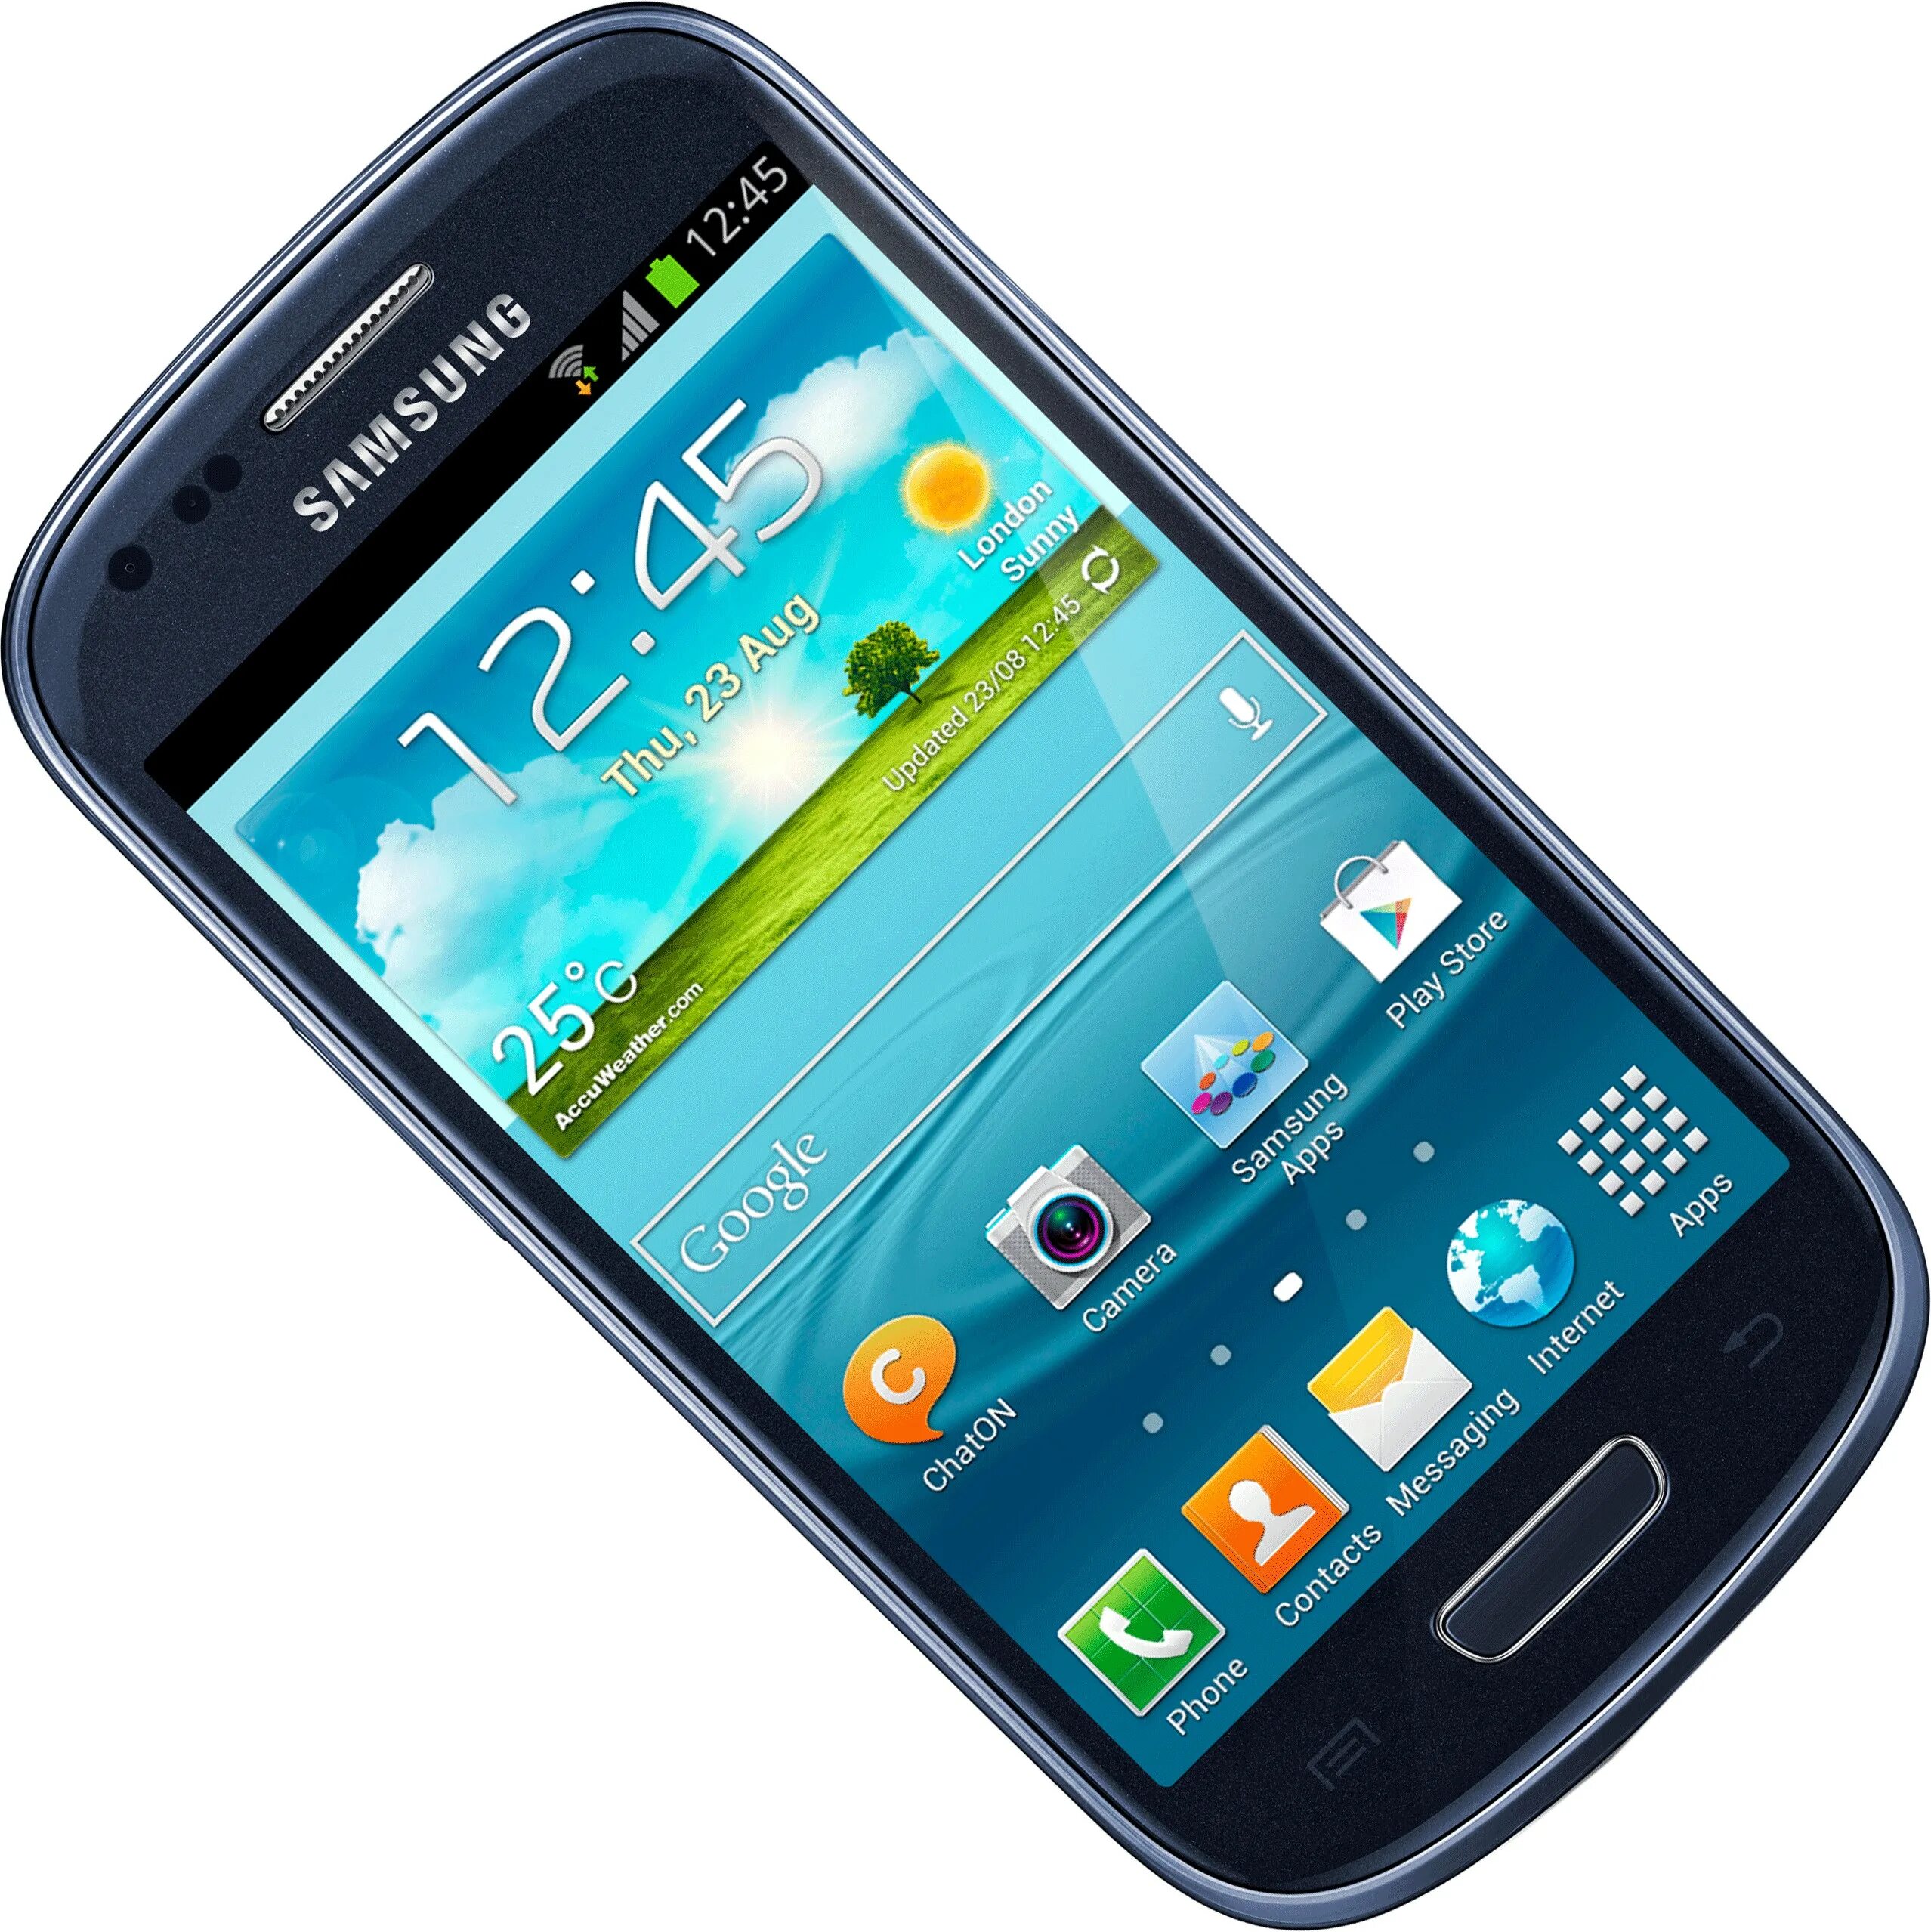 Купить дешевый samsung galaxy. Samsung gt-i8190. Самсунг s3 Mini. Samsung Galaxy s III Mini gt-i8190 8gb. Samsung 8190.